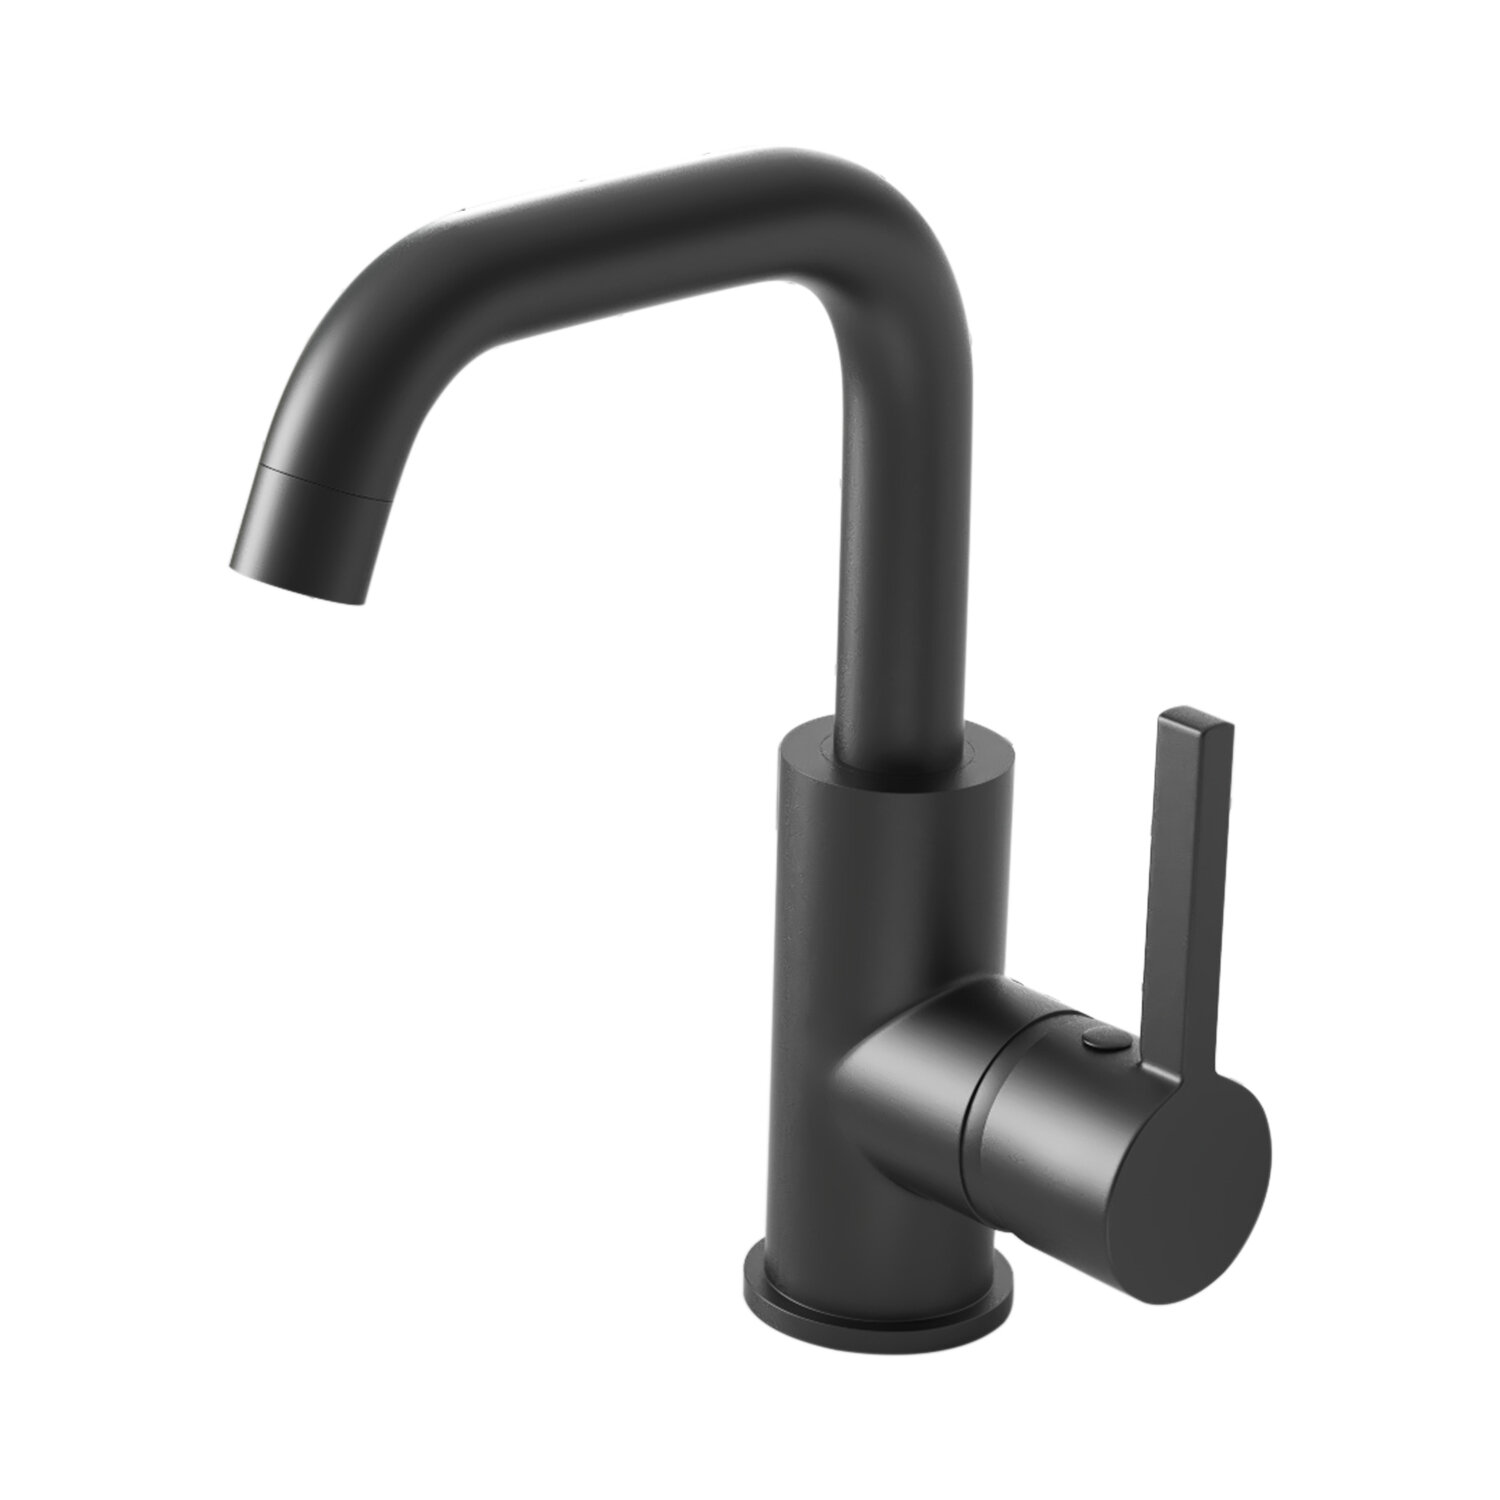 YZZY Single Hole Faucet Single-handle Bathroom Faucet & Reviews | Wayfair